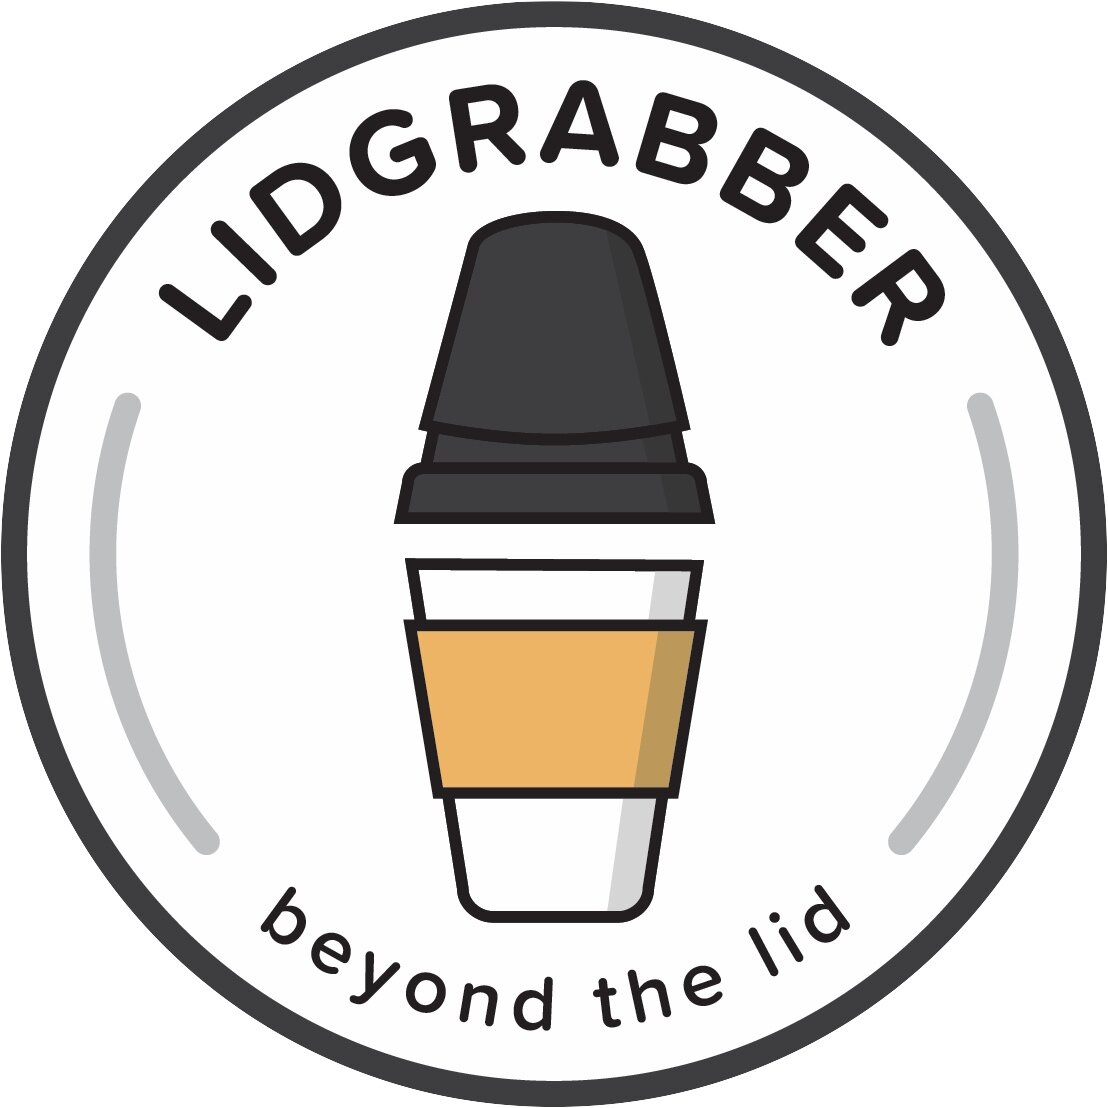 The Lidgrabber